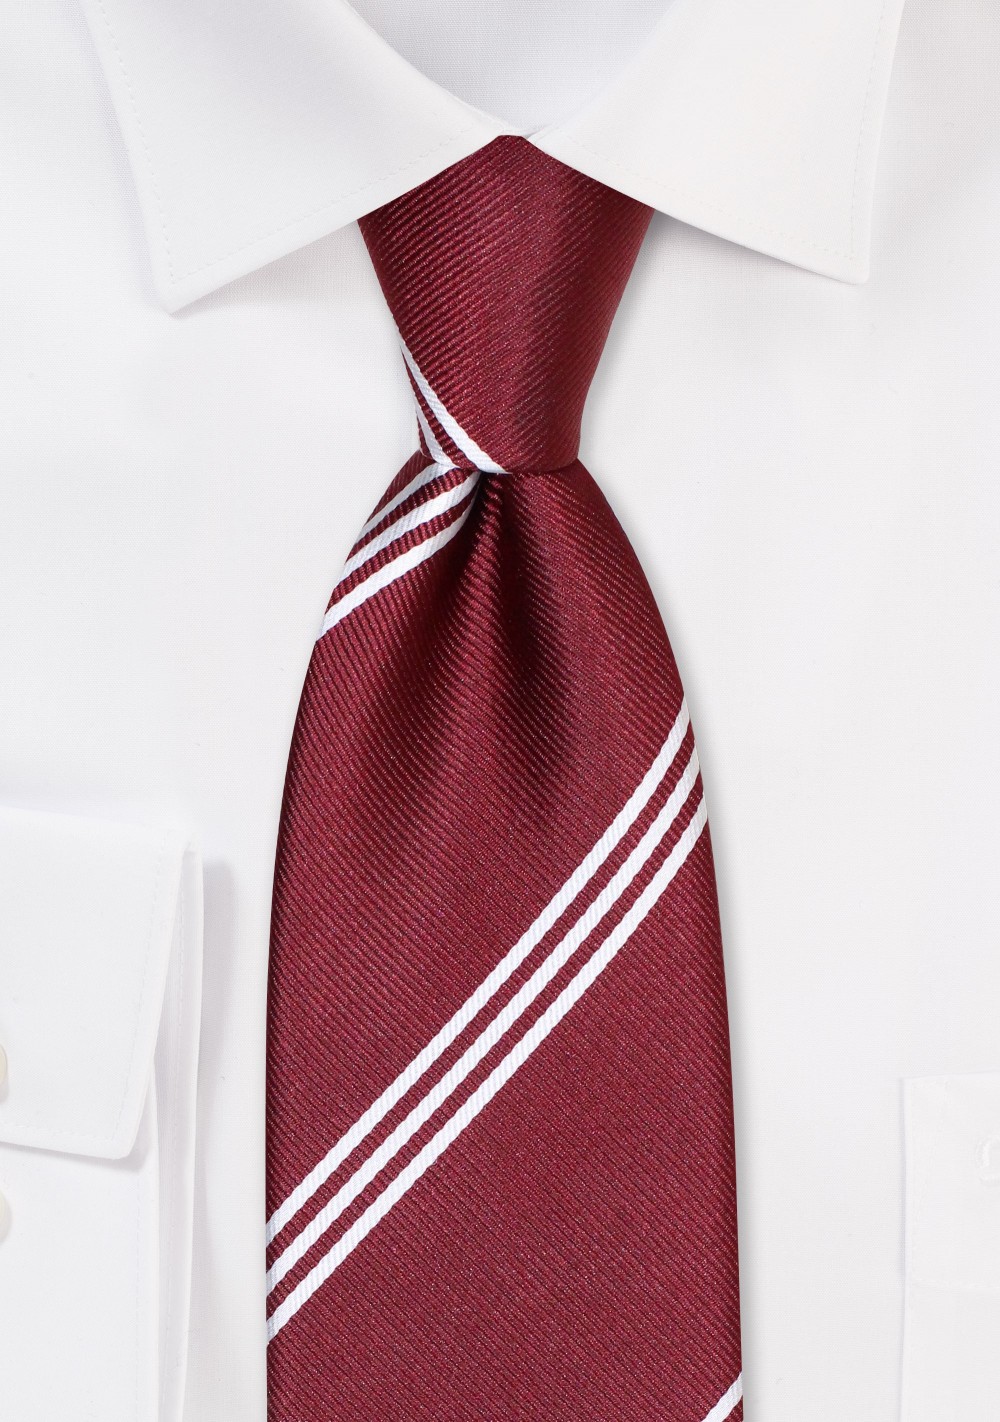 Mahogany and White Striped XL Necktie